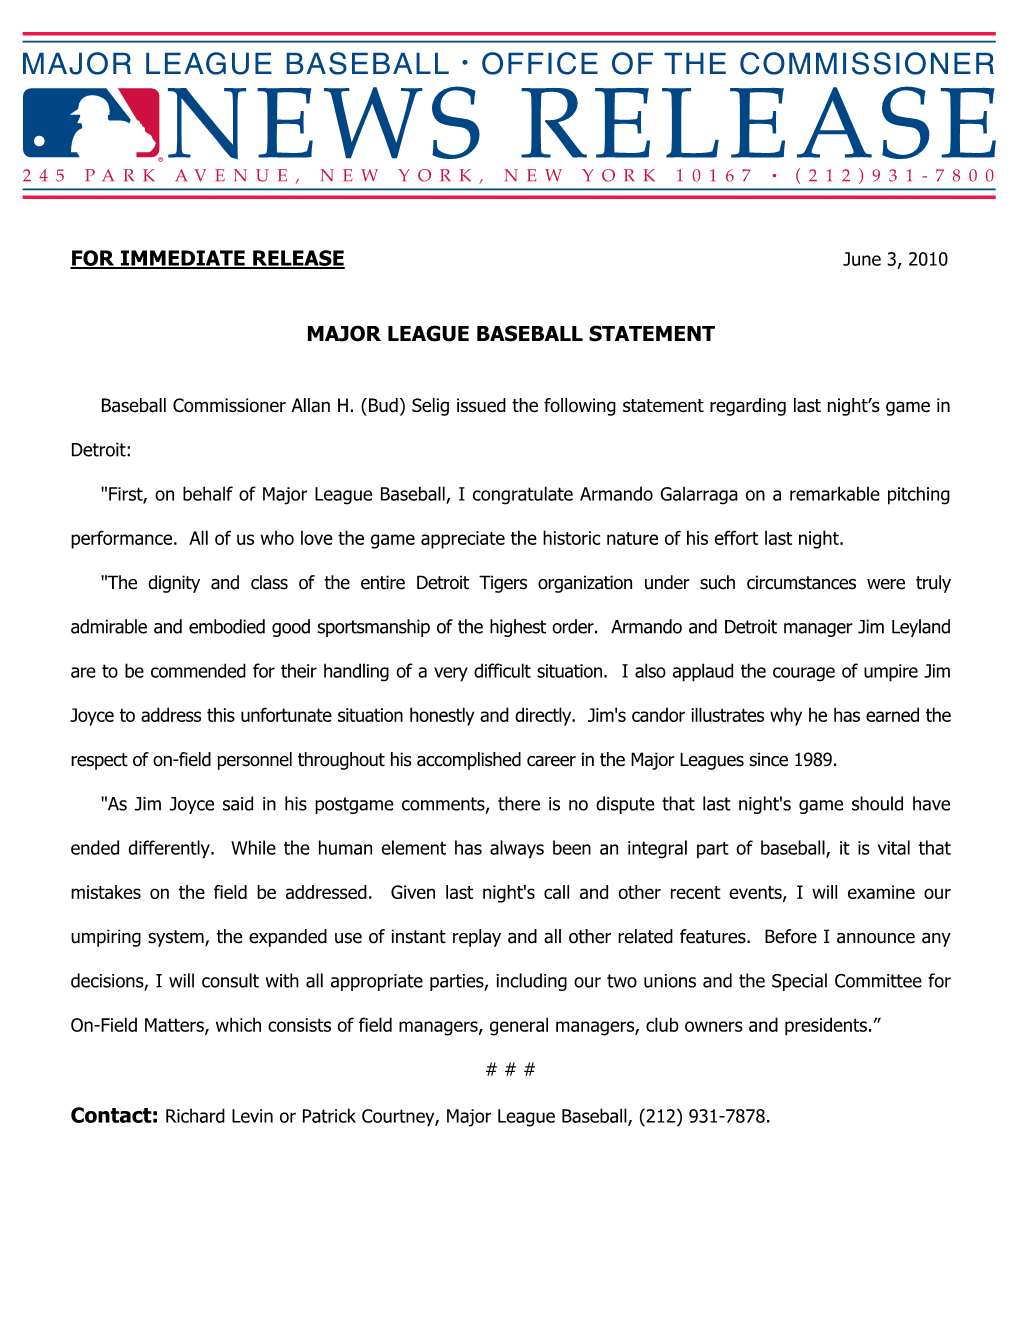 For Immediate Release Major League Baseball